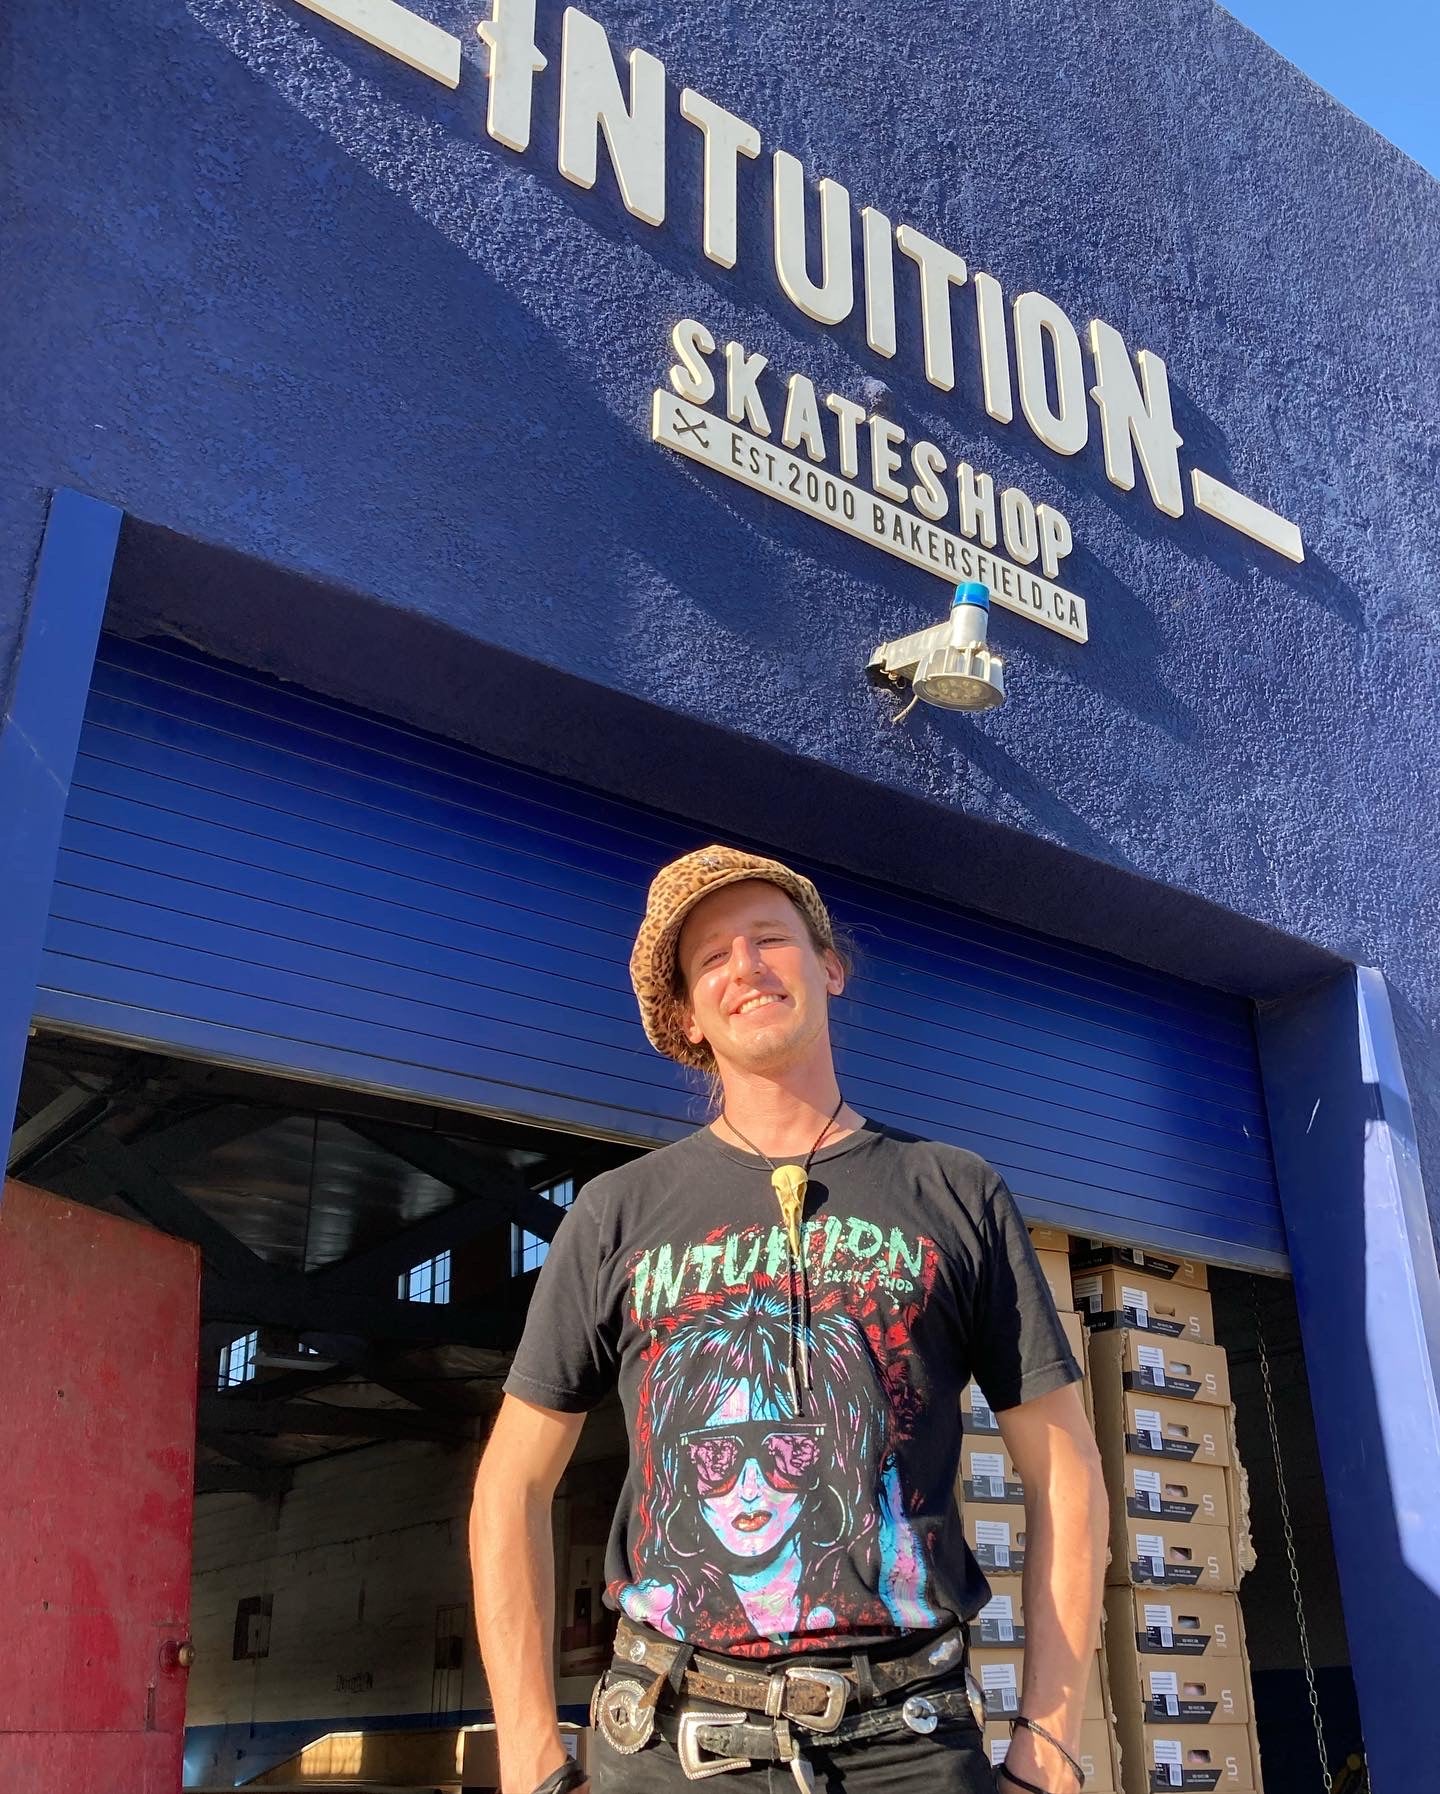 Intuition Chris Farmer shirt, Intuition Shirts, Jeremy Beightol Artwork, Intuition Skate Shop, Skate Shops Near Me